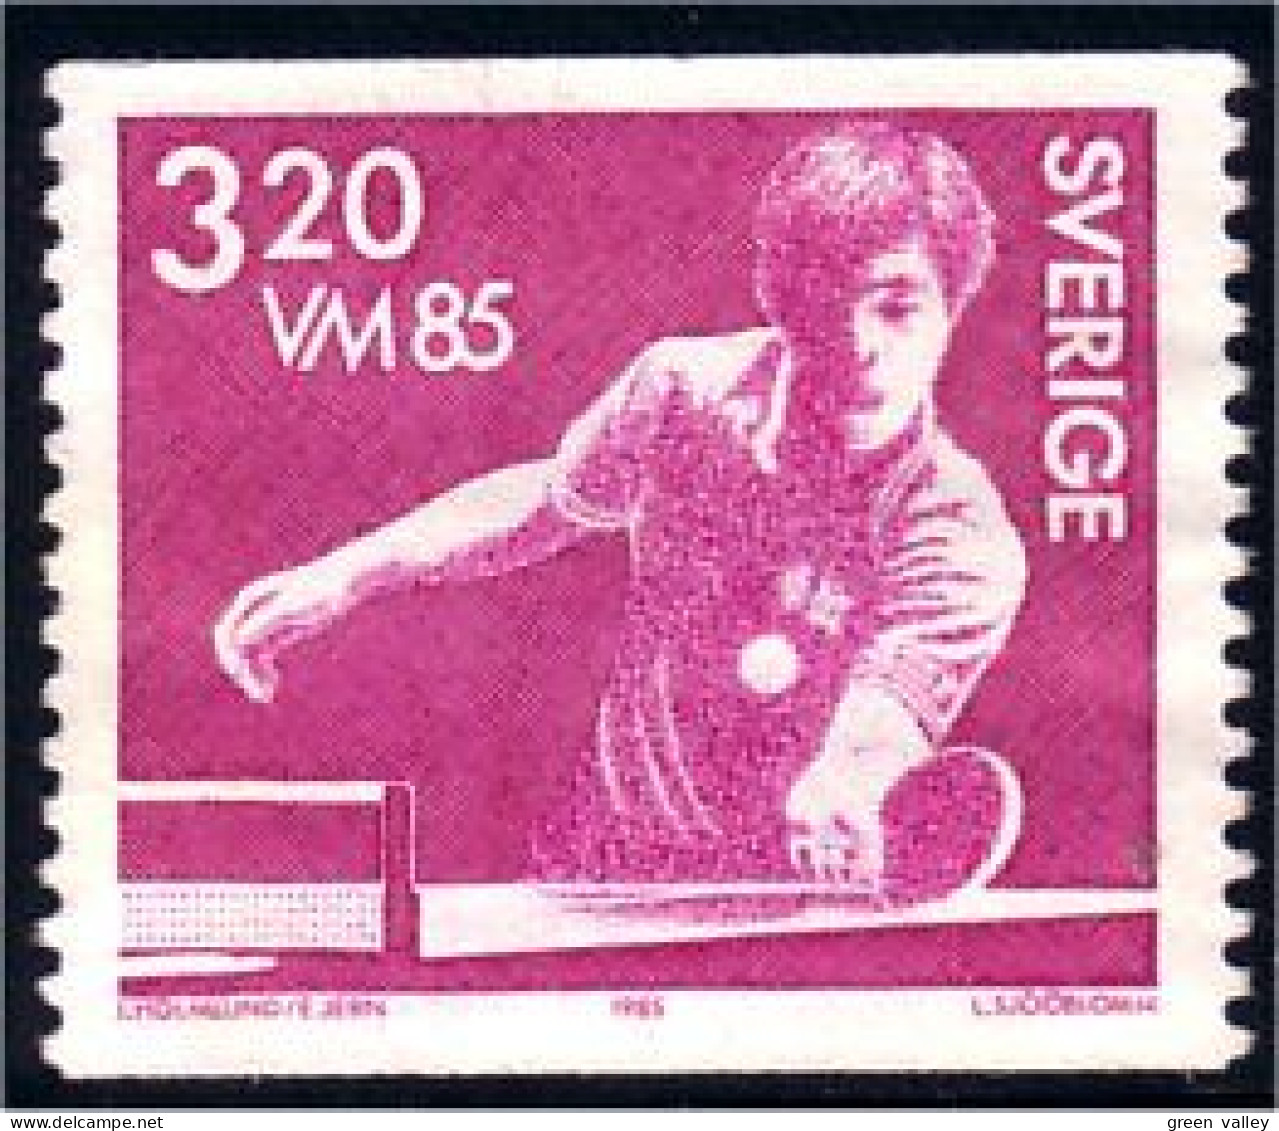 840 Sweden Table Tennis Ping Pong No Gum (SWE-84) - Tafeltennis